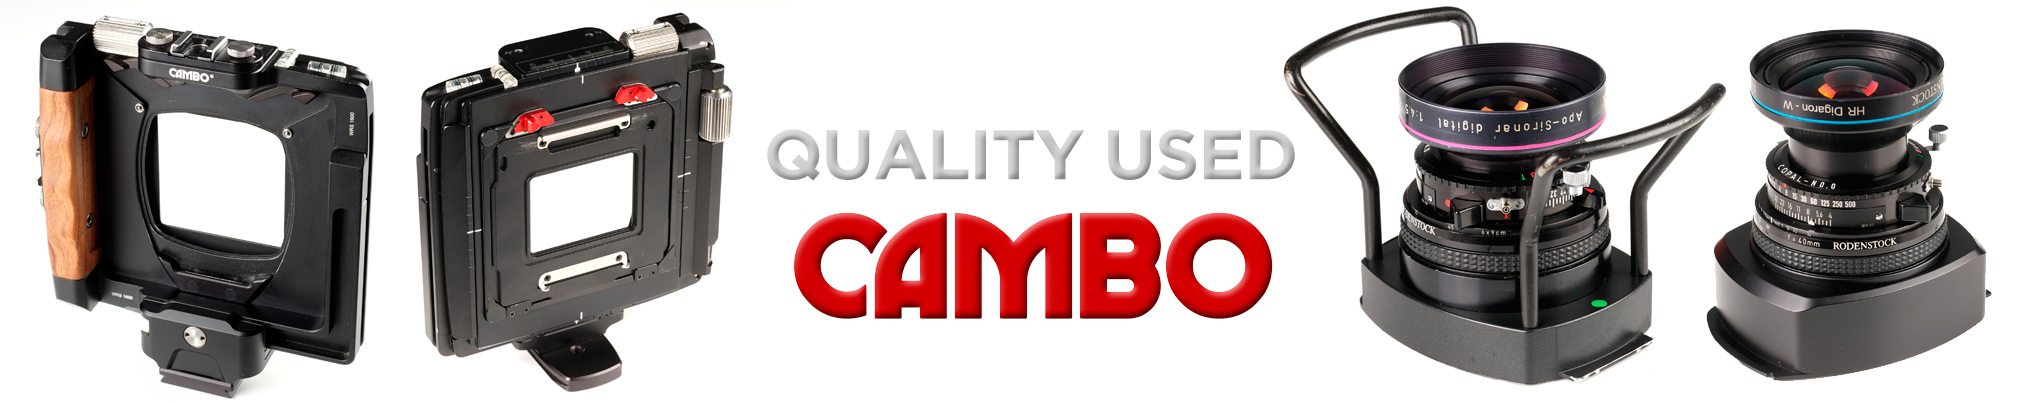 CAMBO-USED-BANNER.jpg